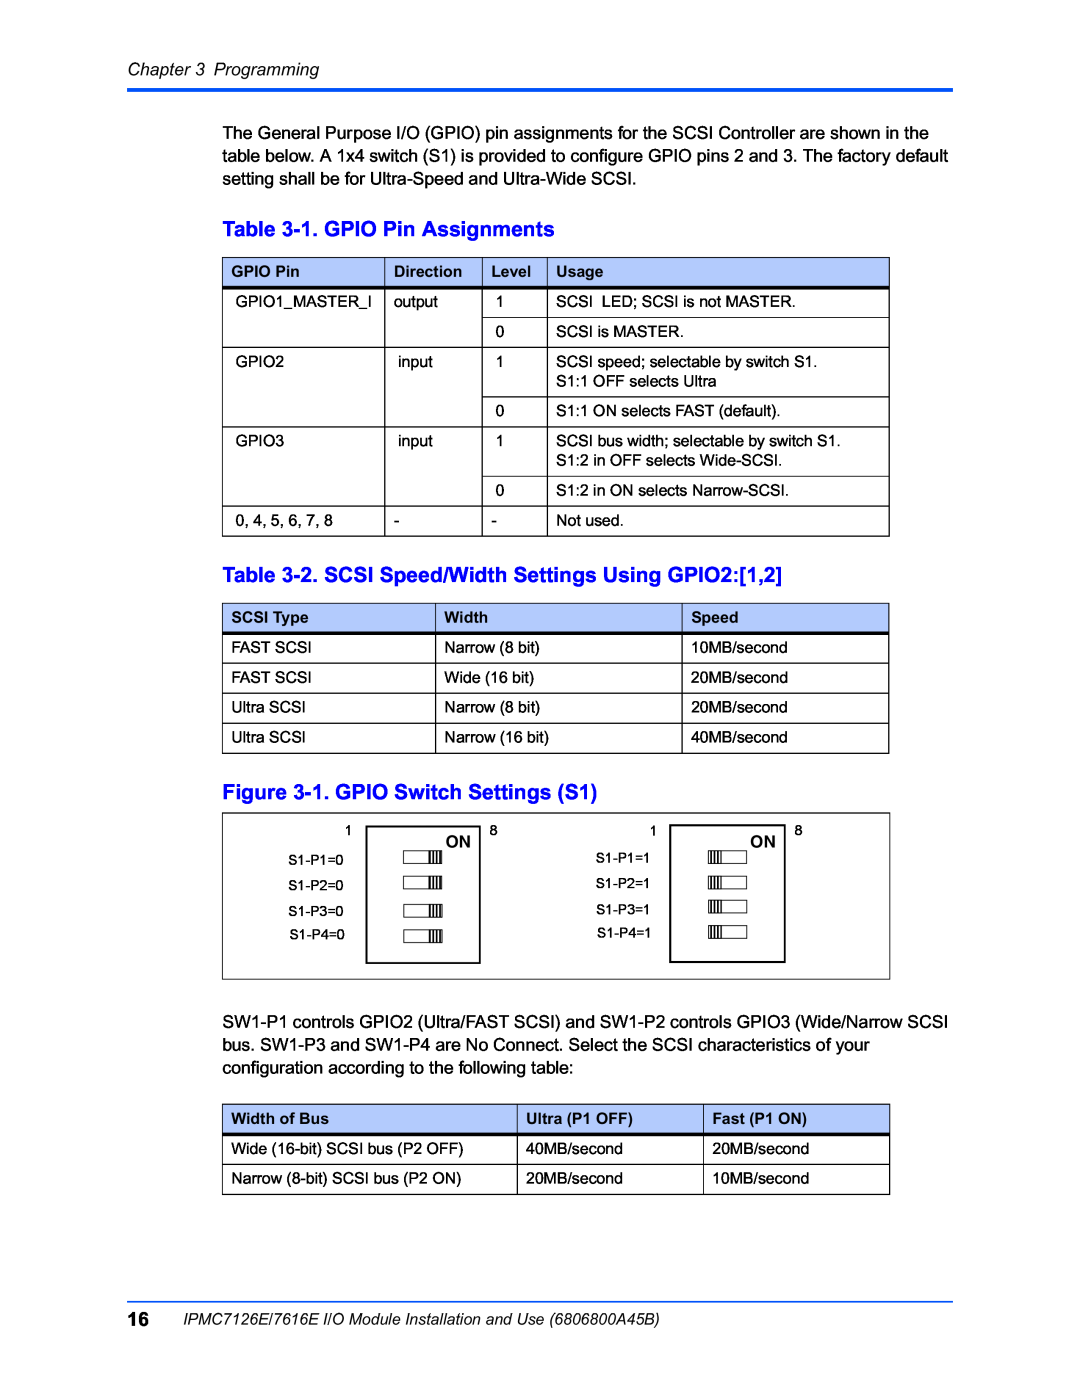 Emerson IPMC7616E manual 1. GPIO Pin Assignments, 2. SCSI Speed/Width Settings Using GPIO21,2, 1. GPIO Switch Settings S1 